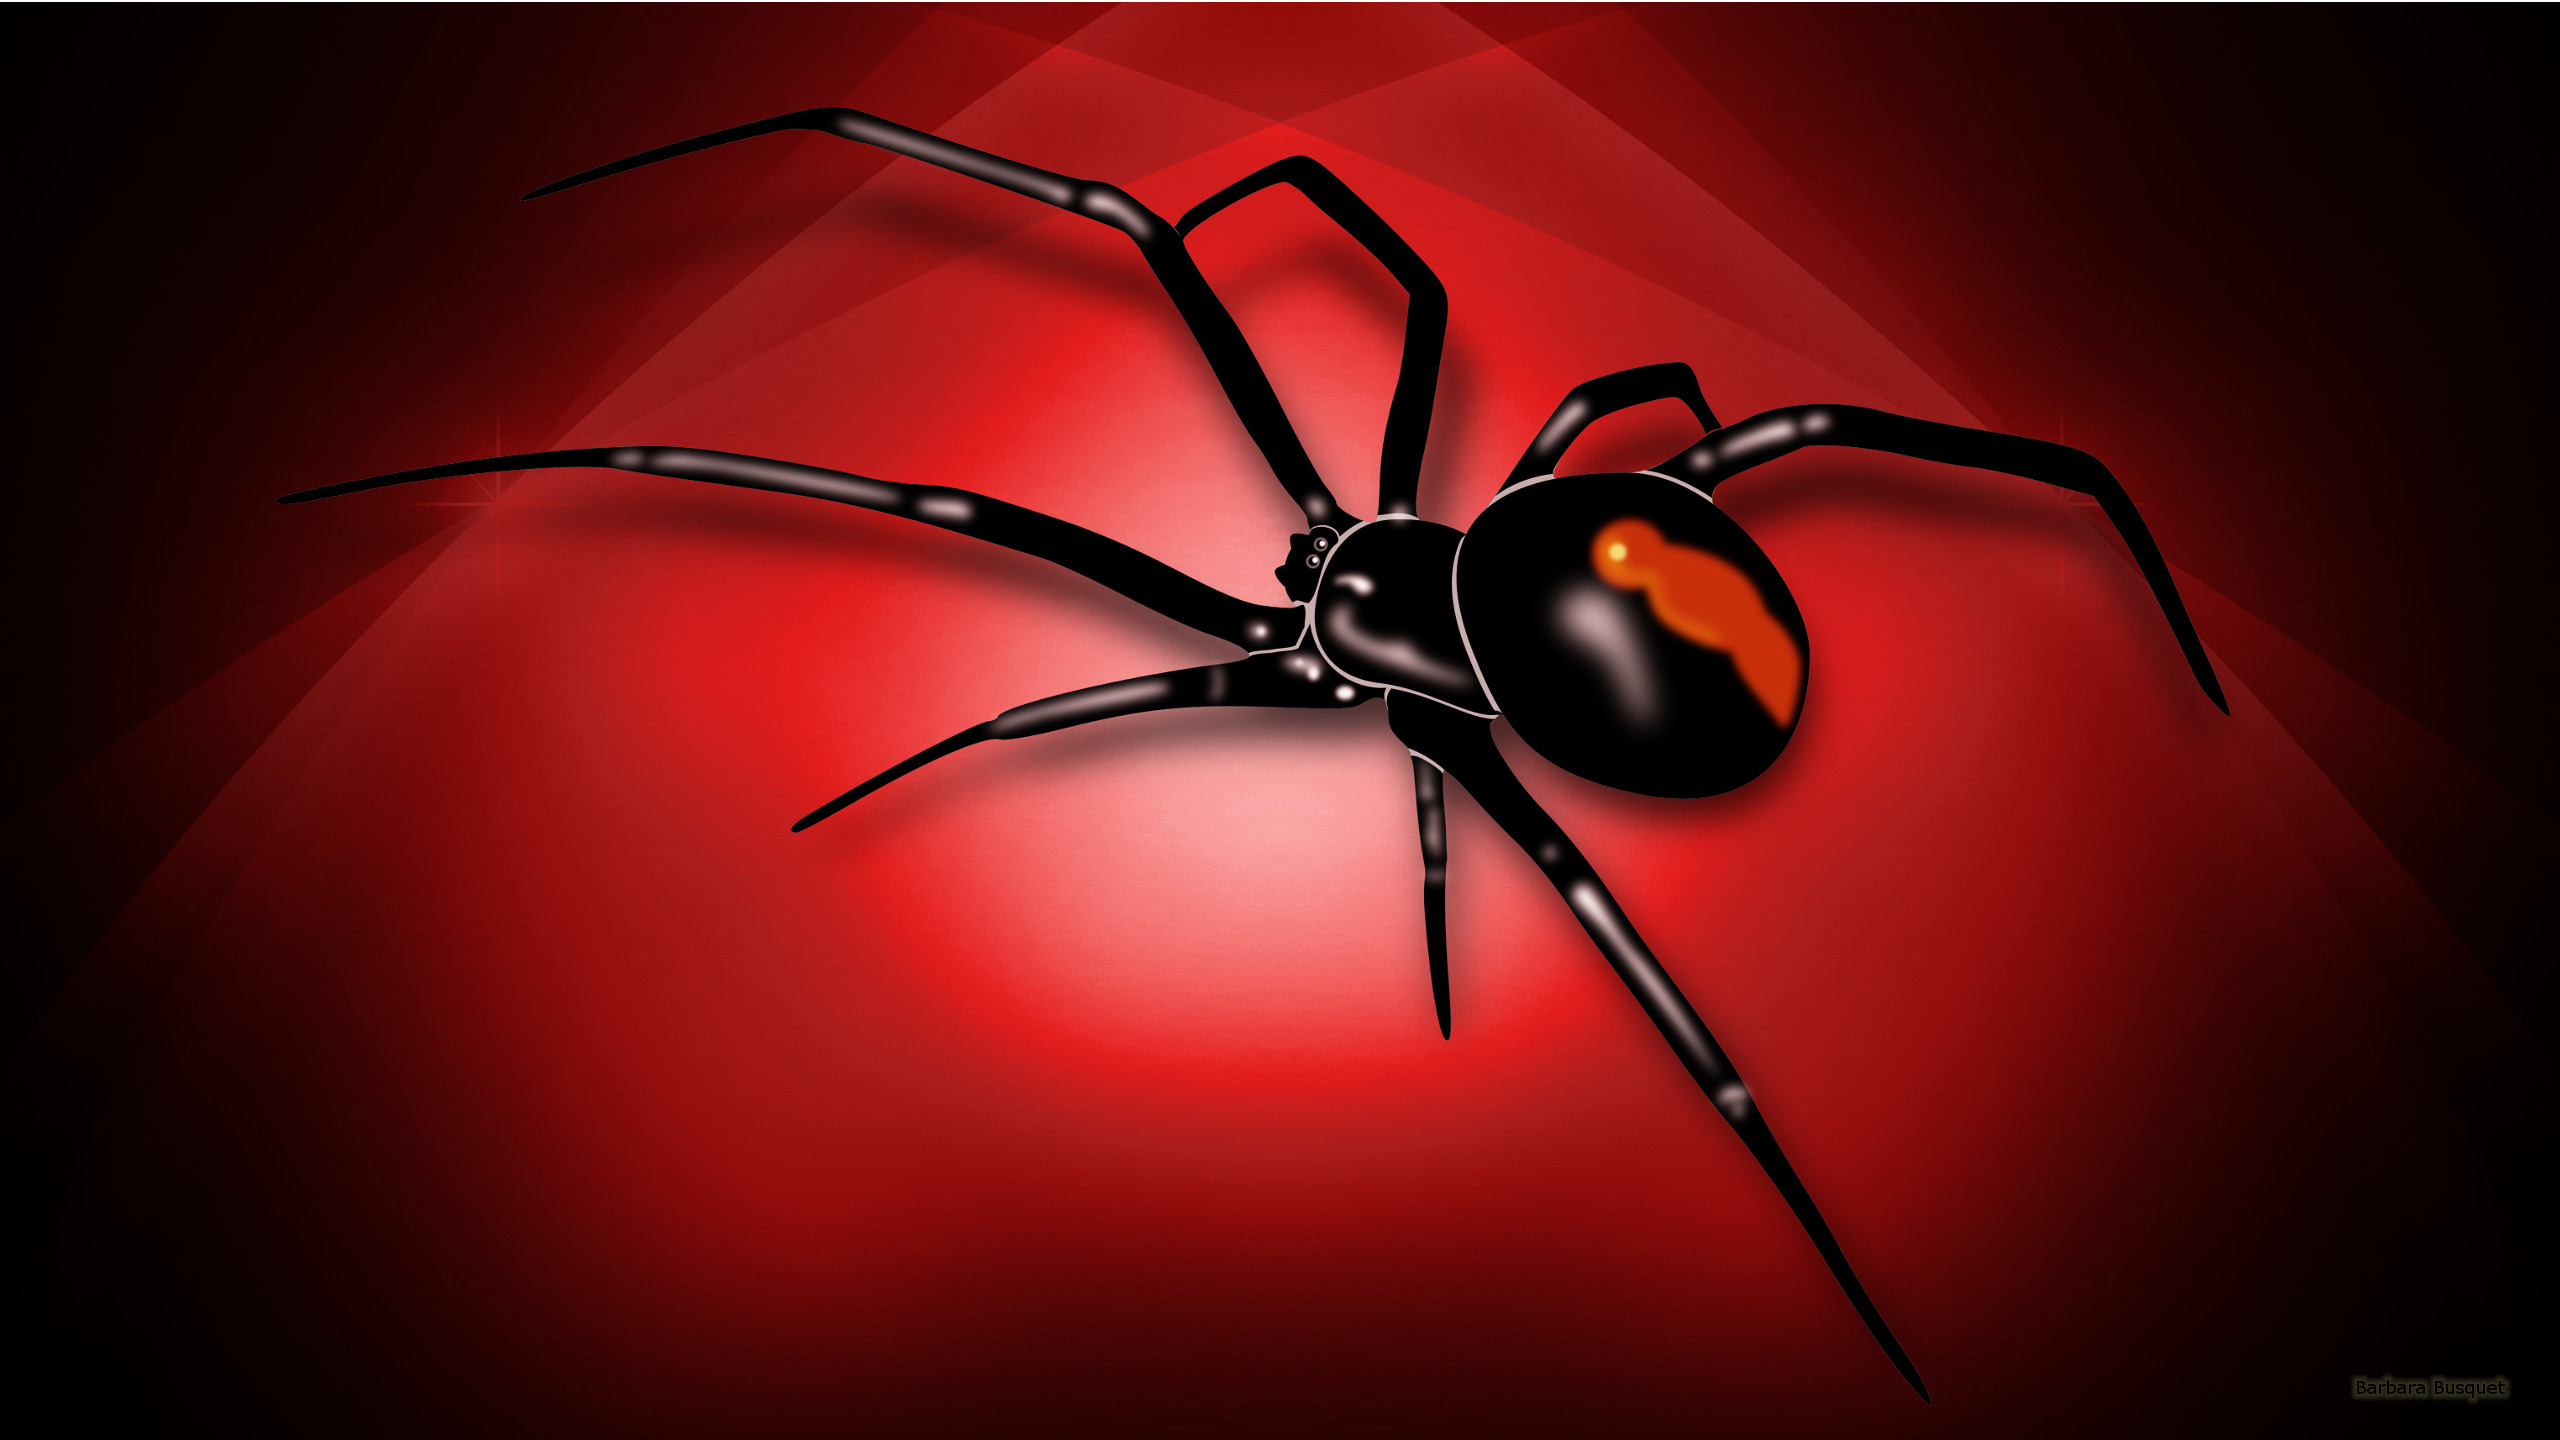 Black Widow Spider Wallpaper Image